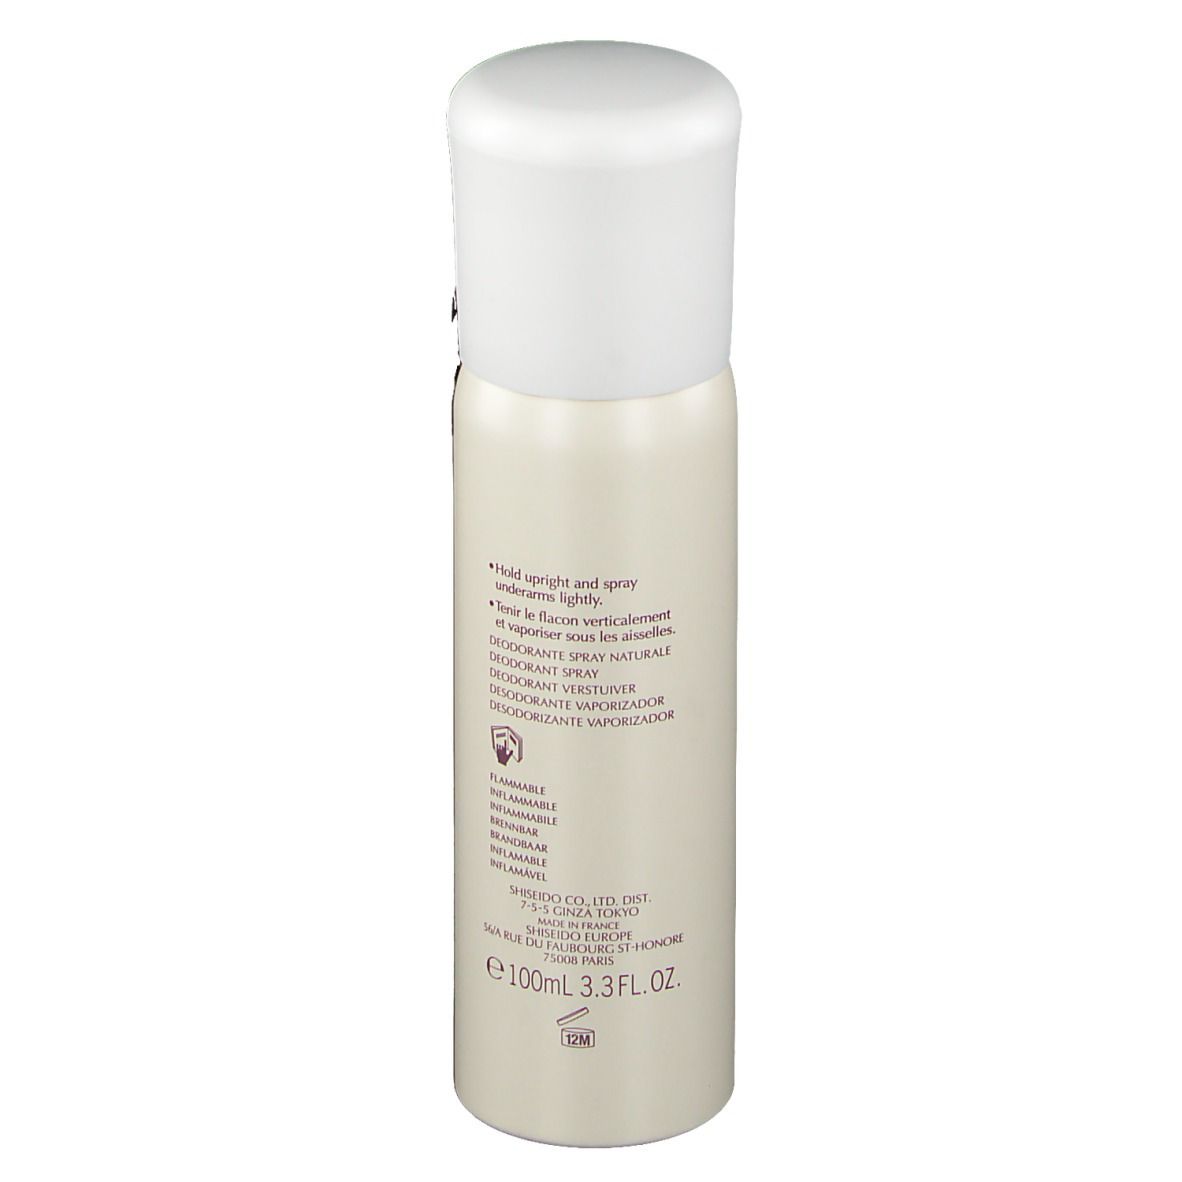 Shiseido Deodortant Natural Spray